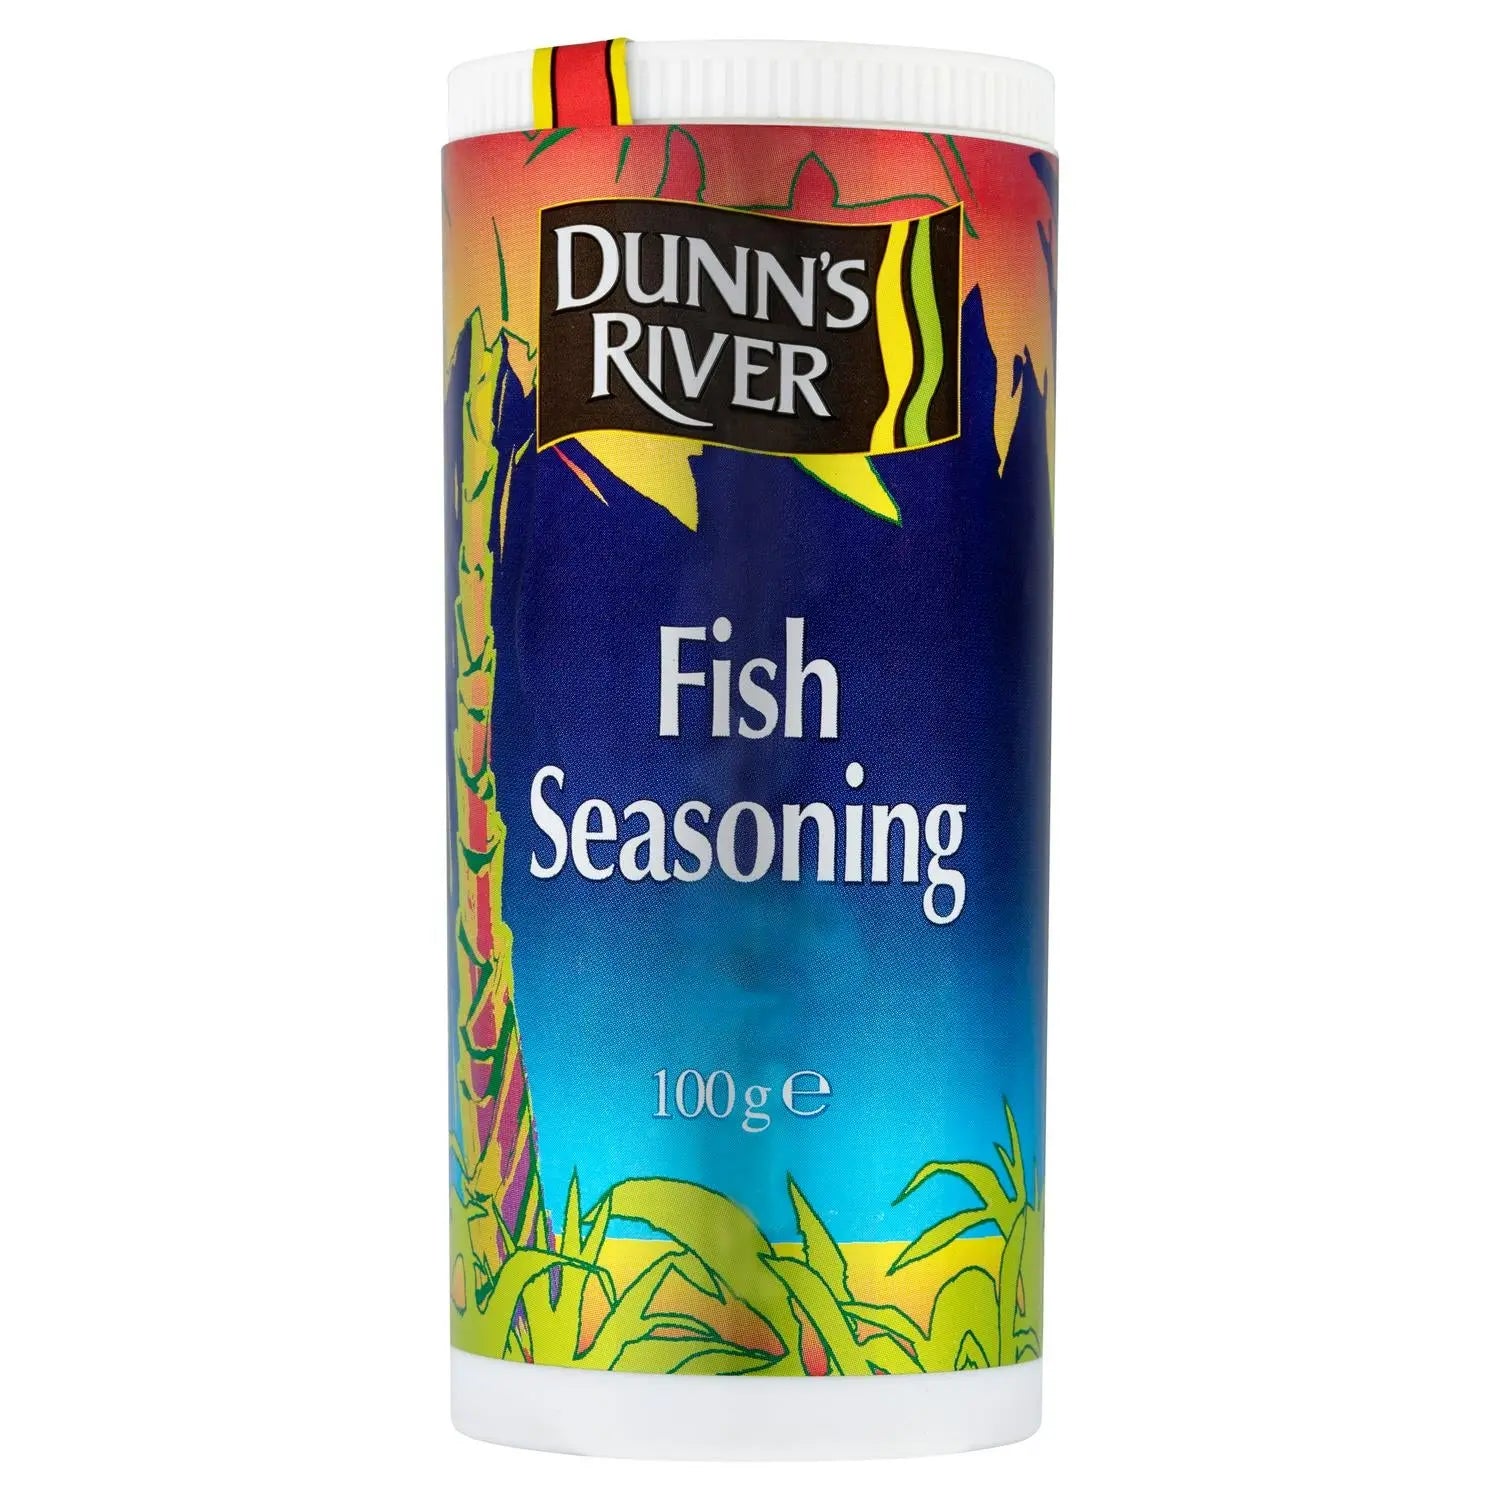 Dunns’ River Fish Seasoning 100g (12 Pcs in Case)